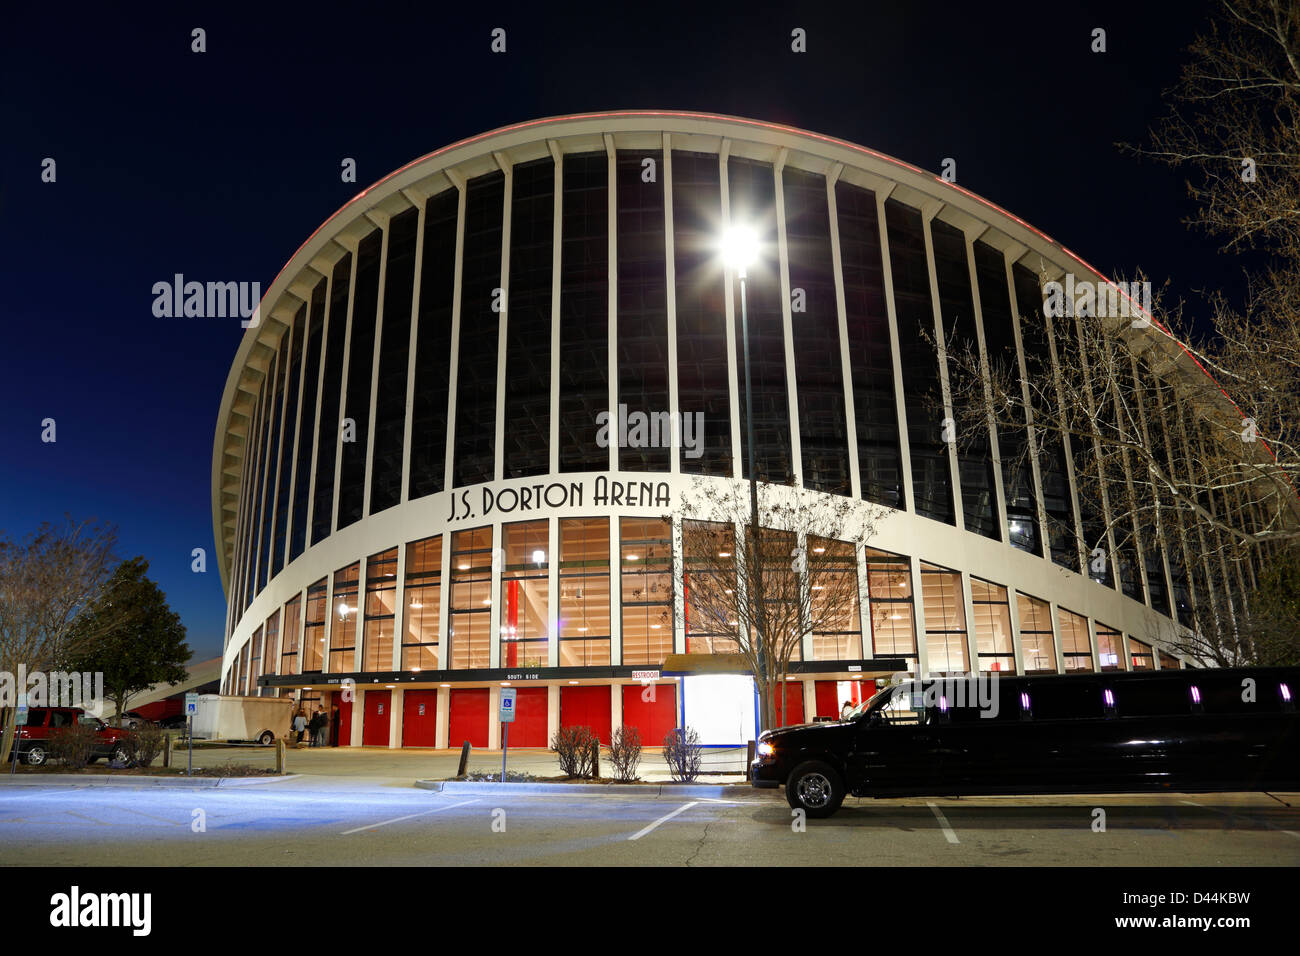 inside - Picture of J.S. Dorton Arena, Raleigh - Tripadvisor